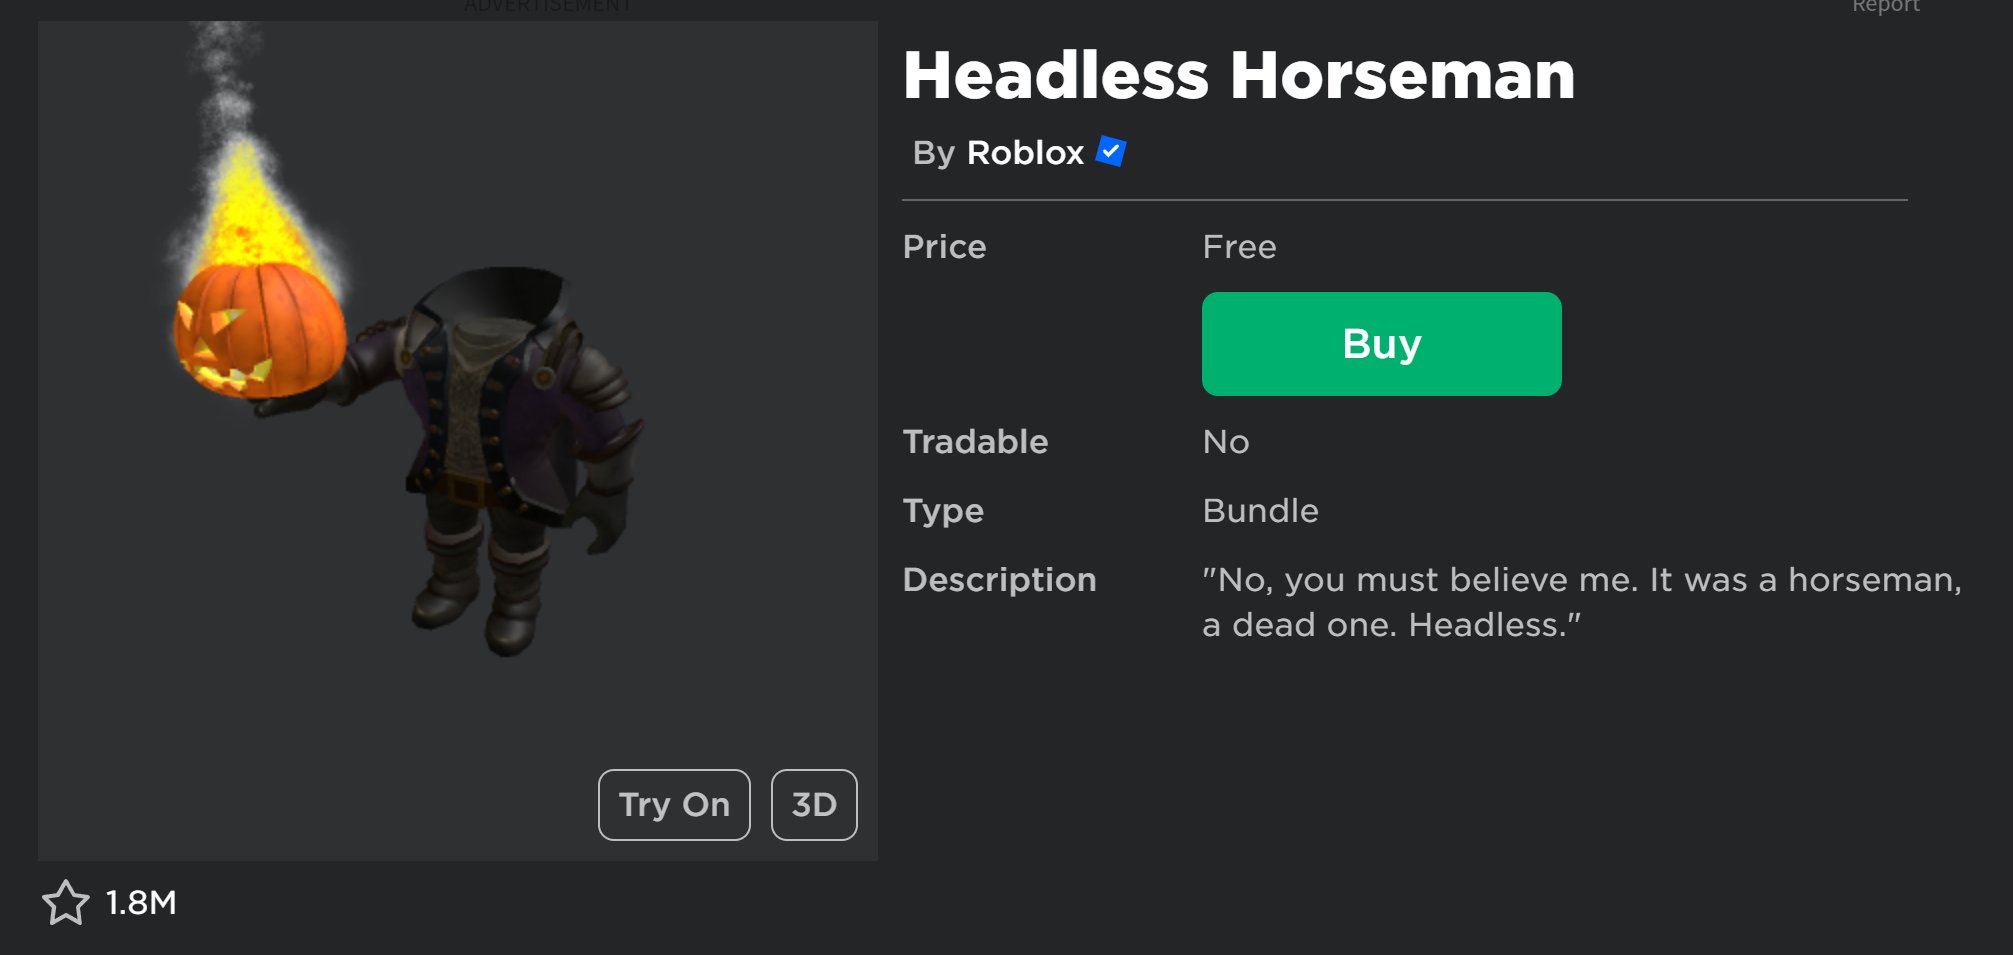 NEW* GET FREE HEADLESS HORSEMAN BUNDLE IN ROBLOX! 😎 